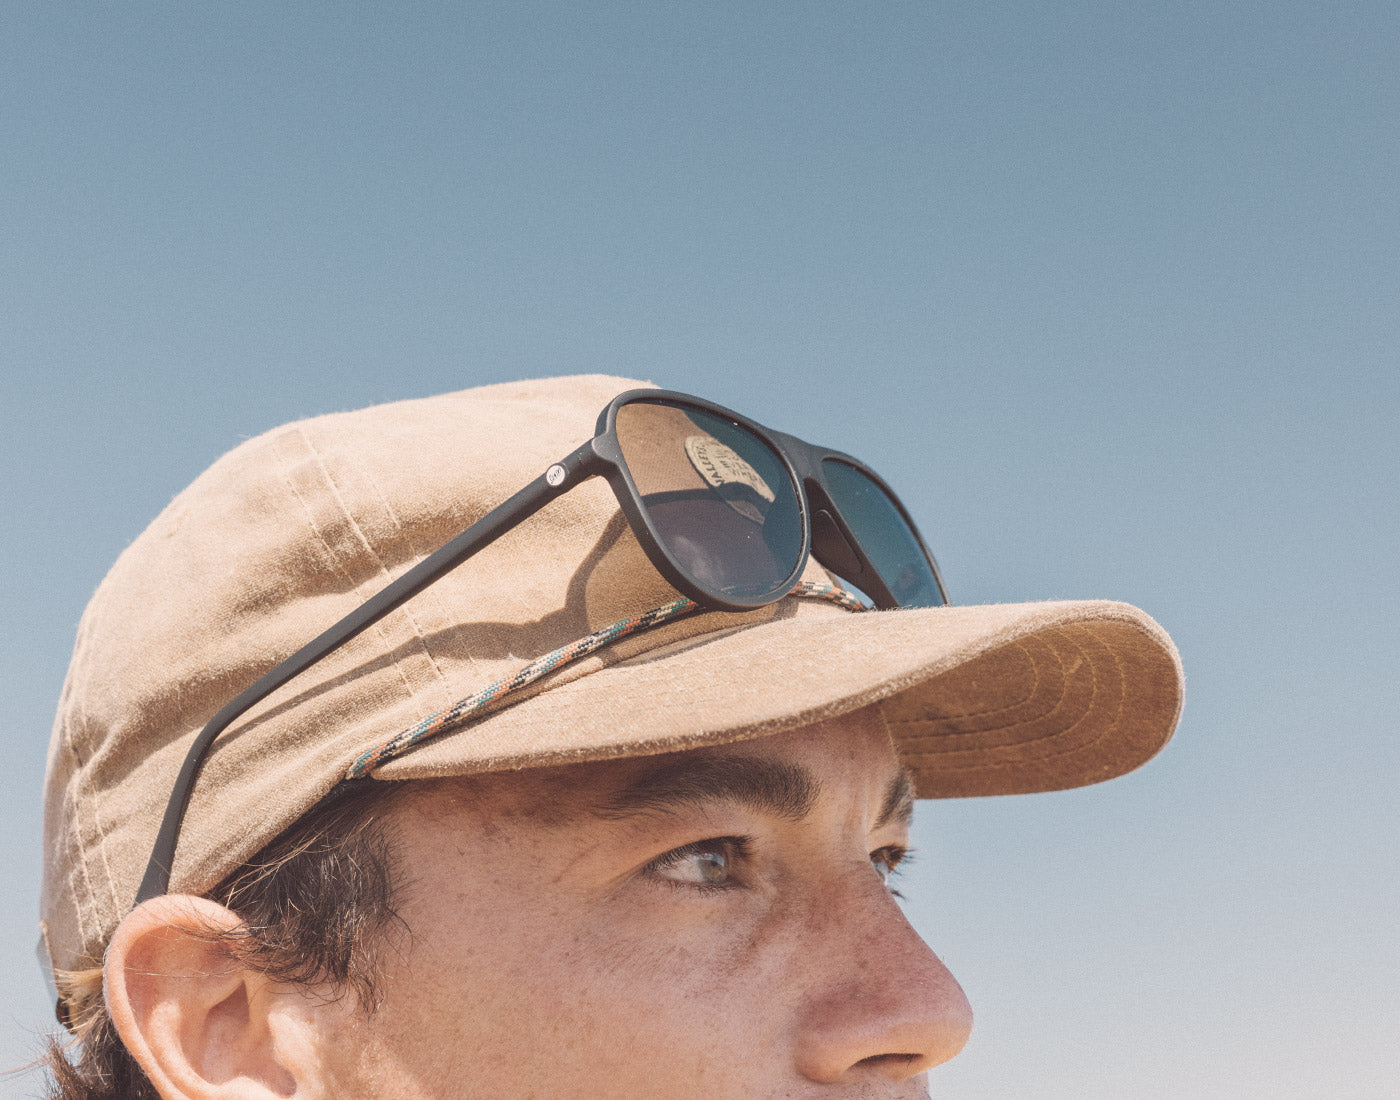 profile of guy with sunski foxtrot sunglasses on hat